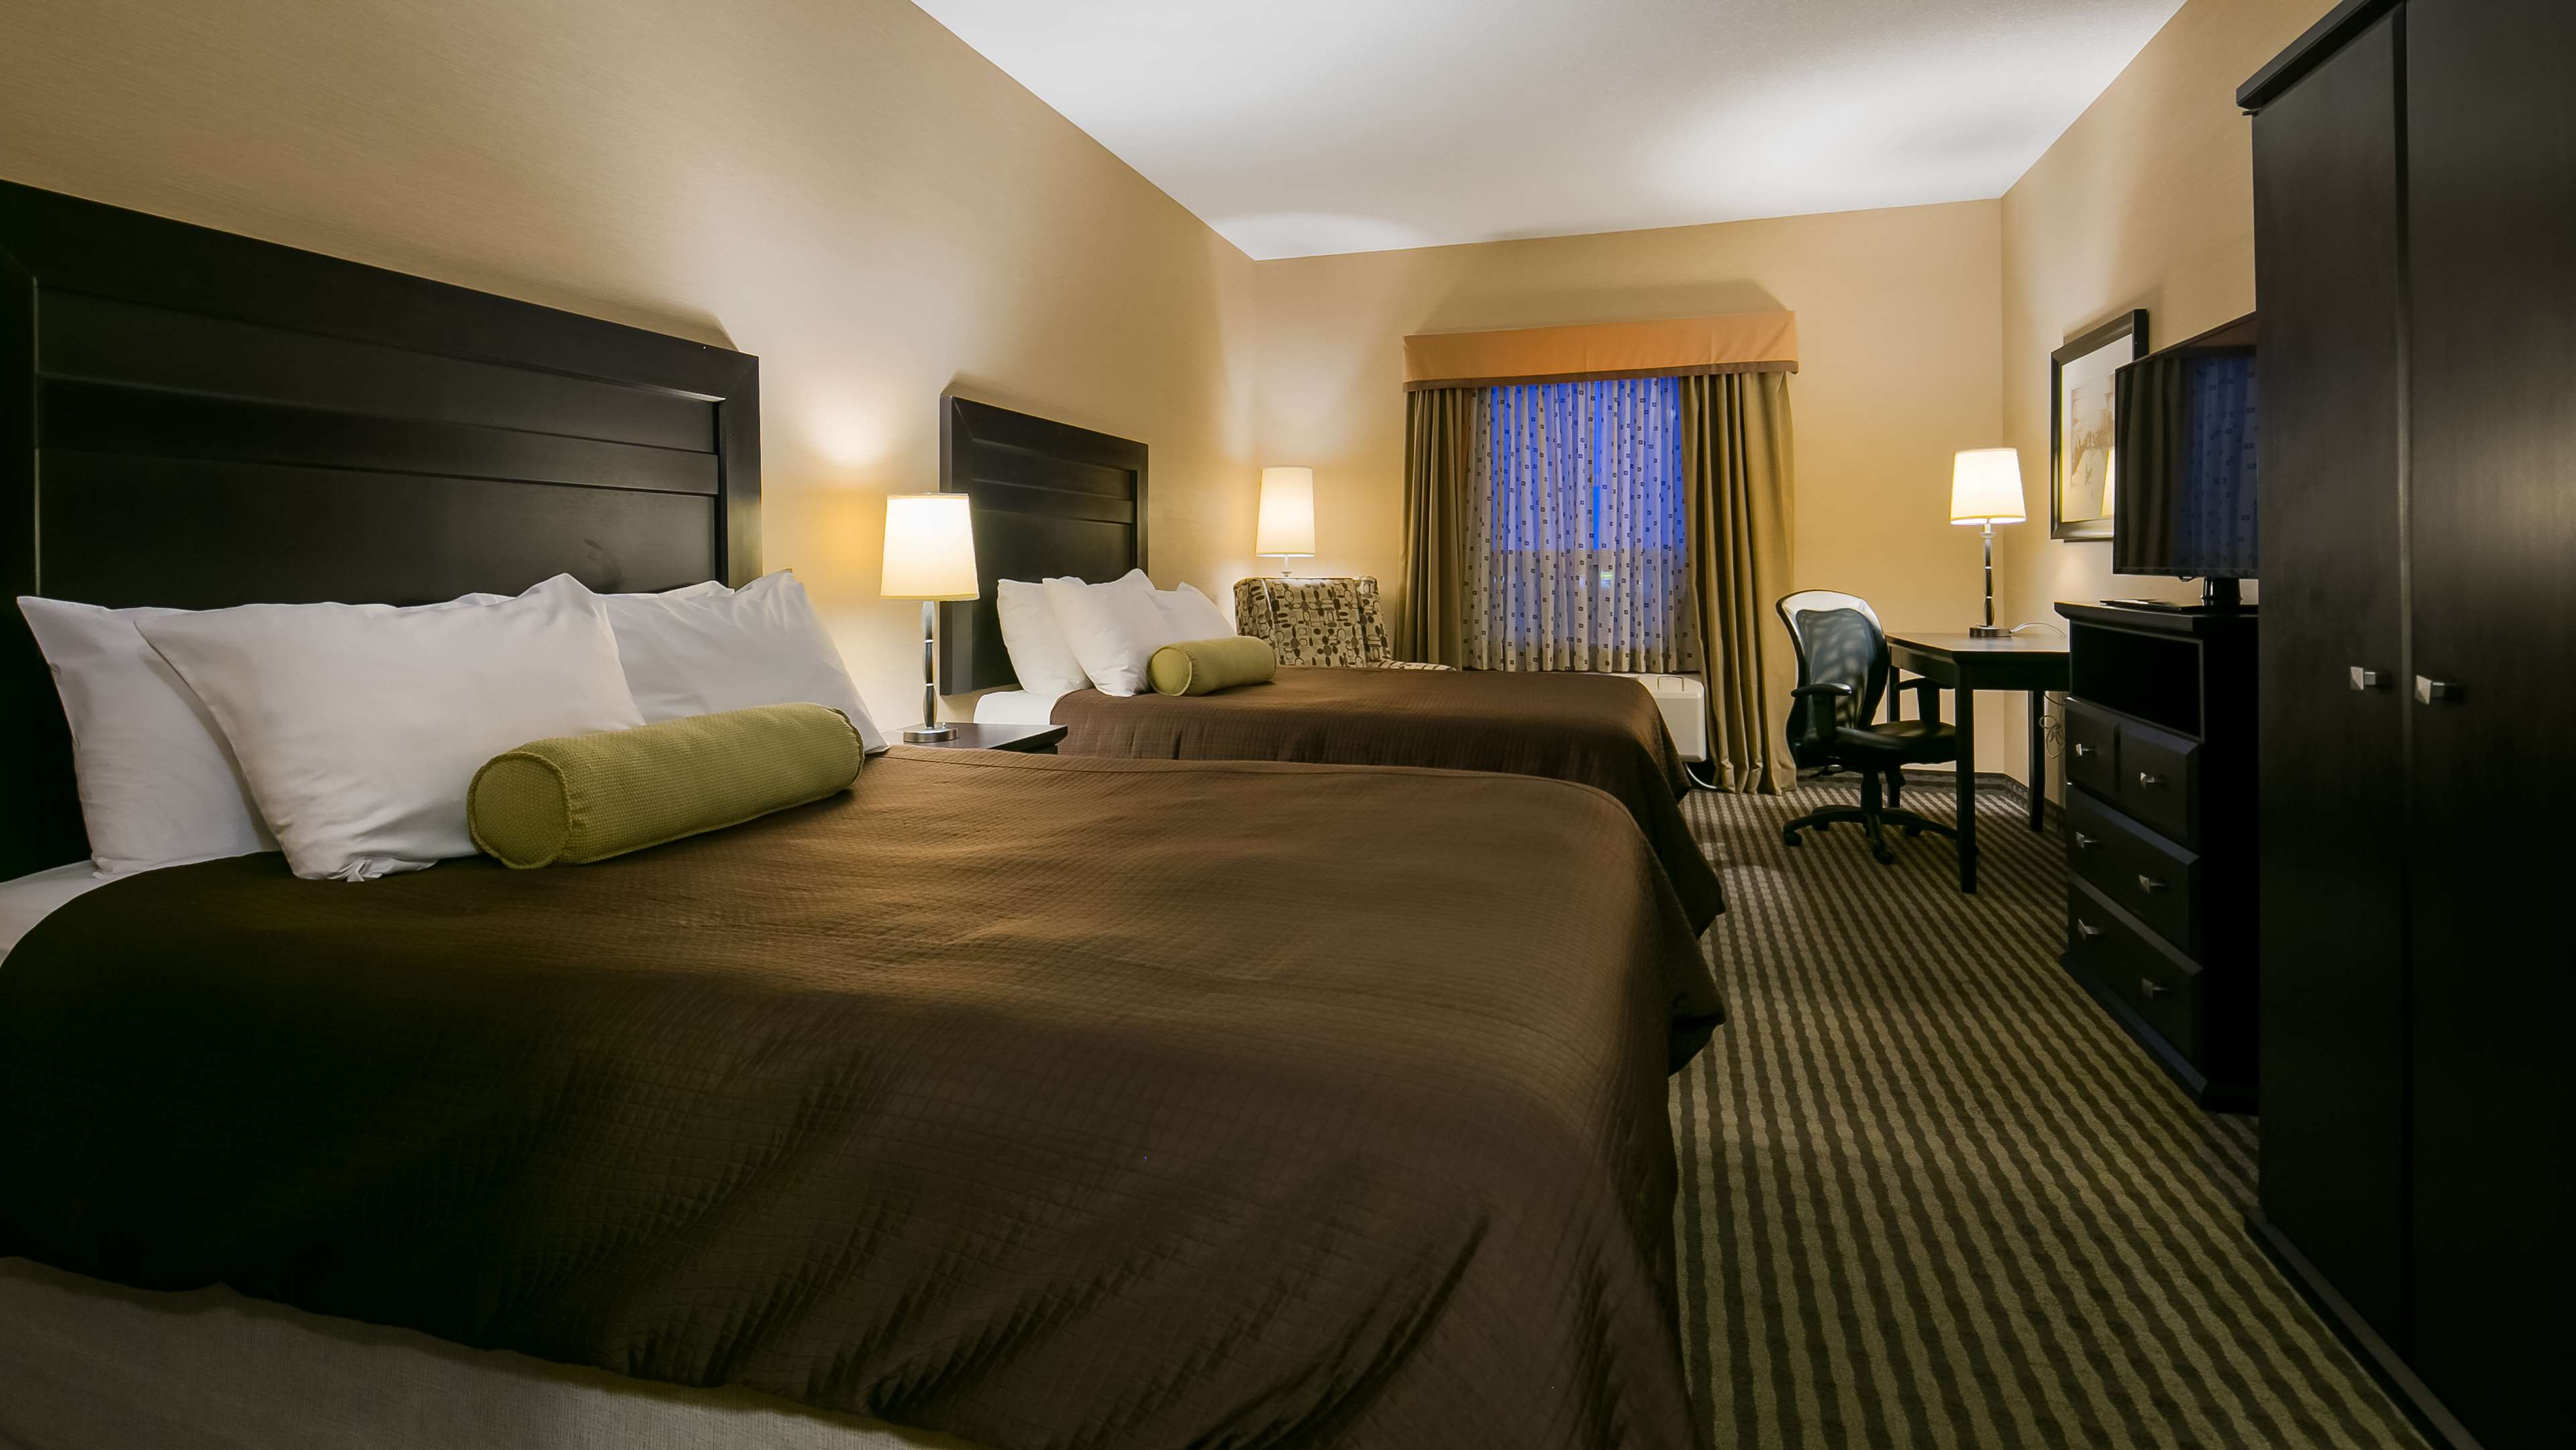 Guest Room Best Western Sunrise Inn & Suites Stony Plain (780)968-1716